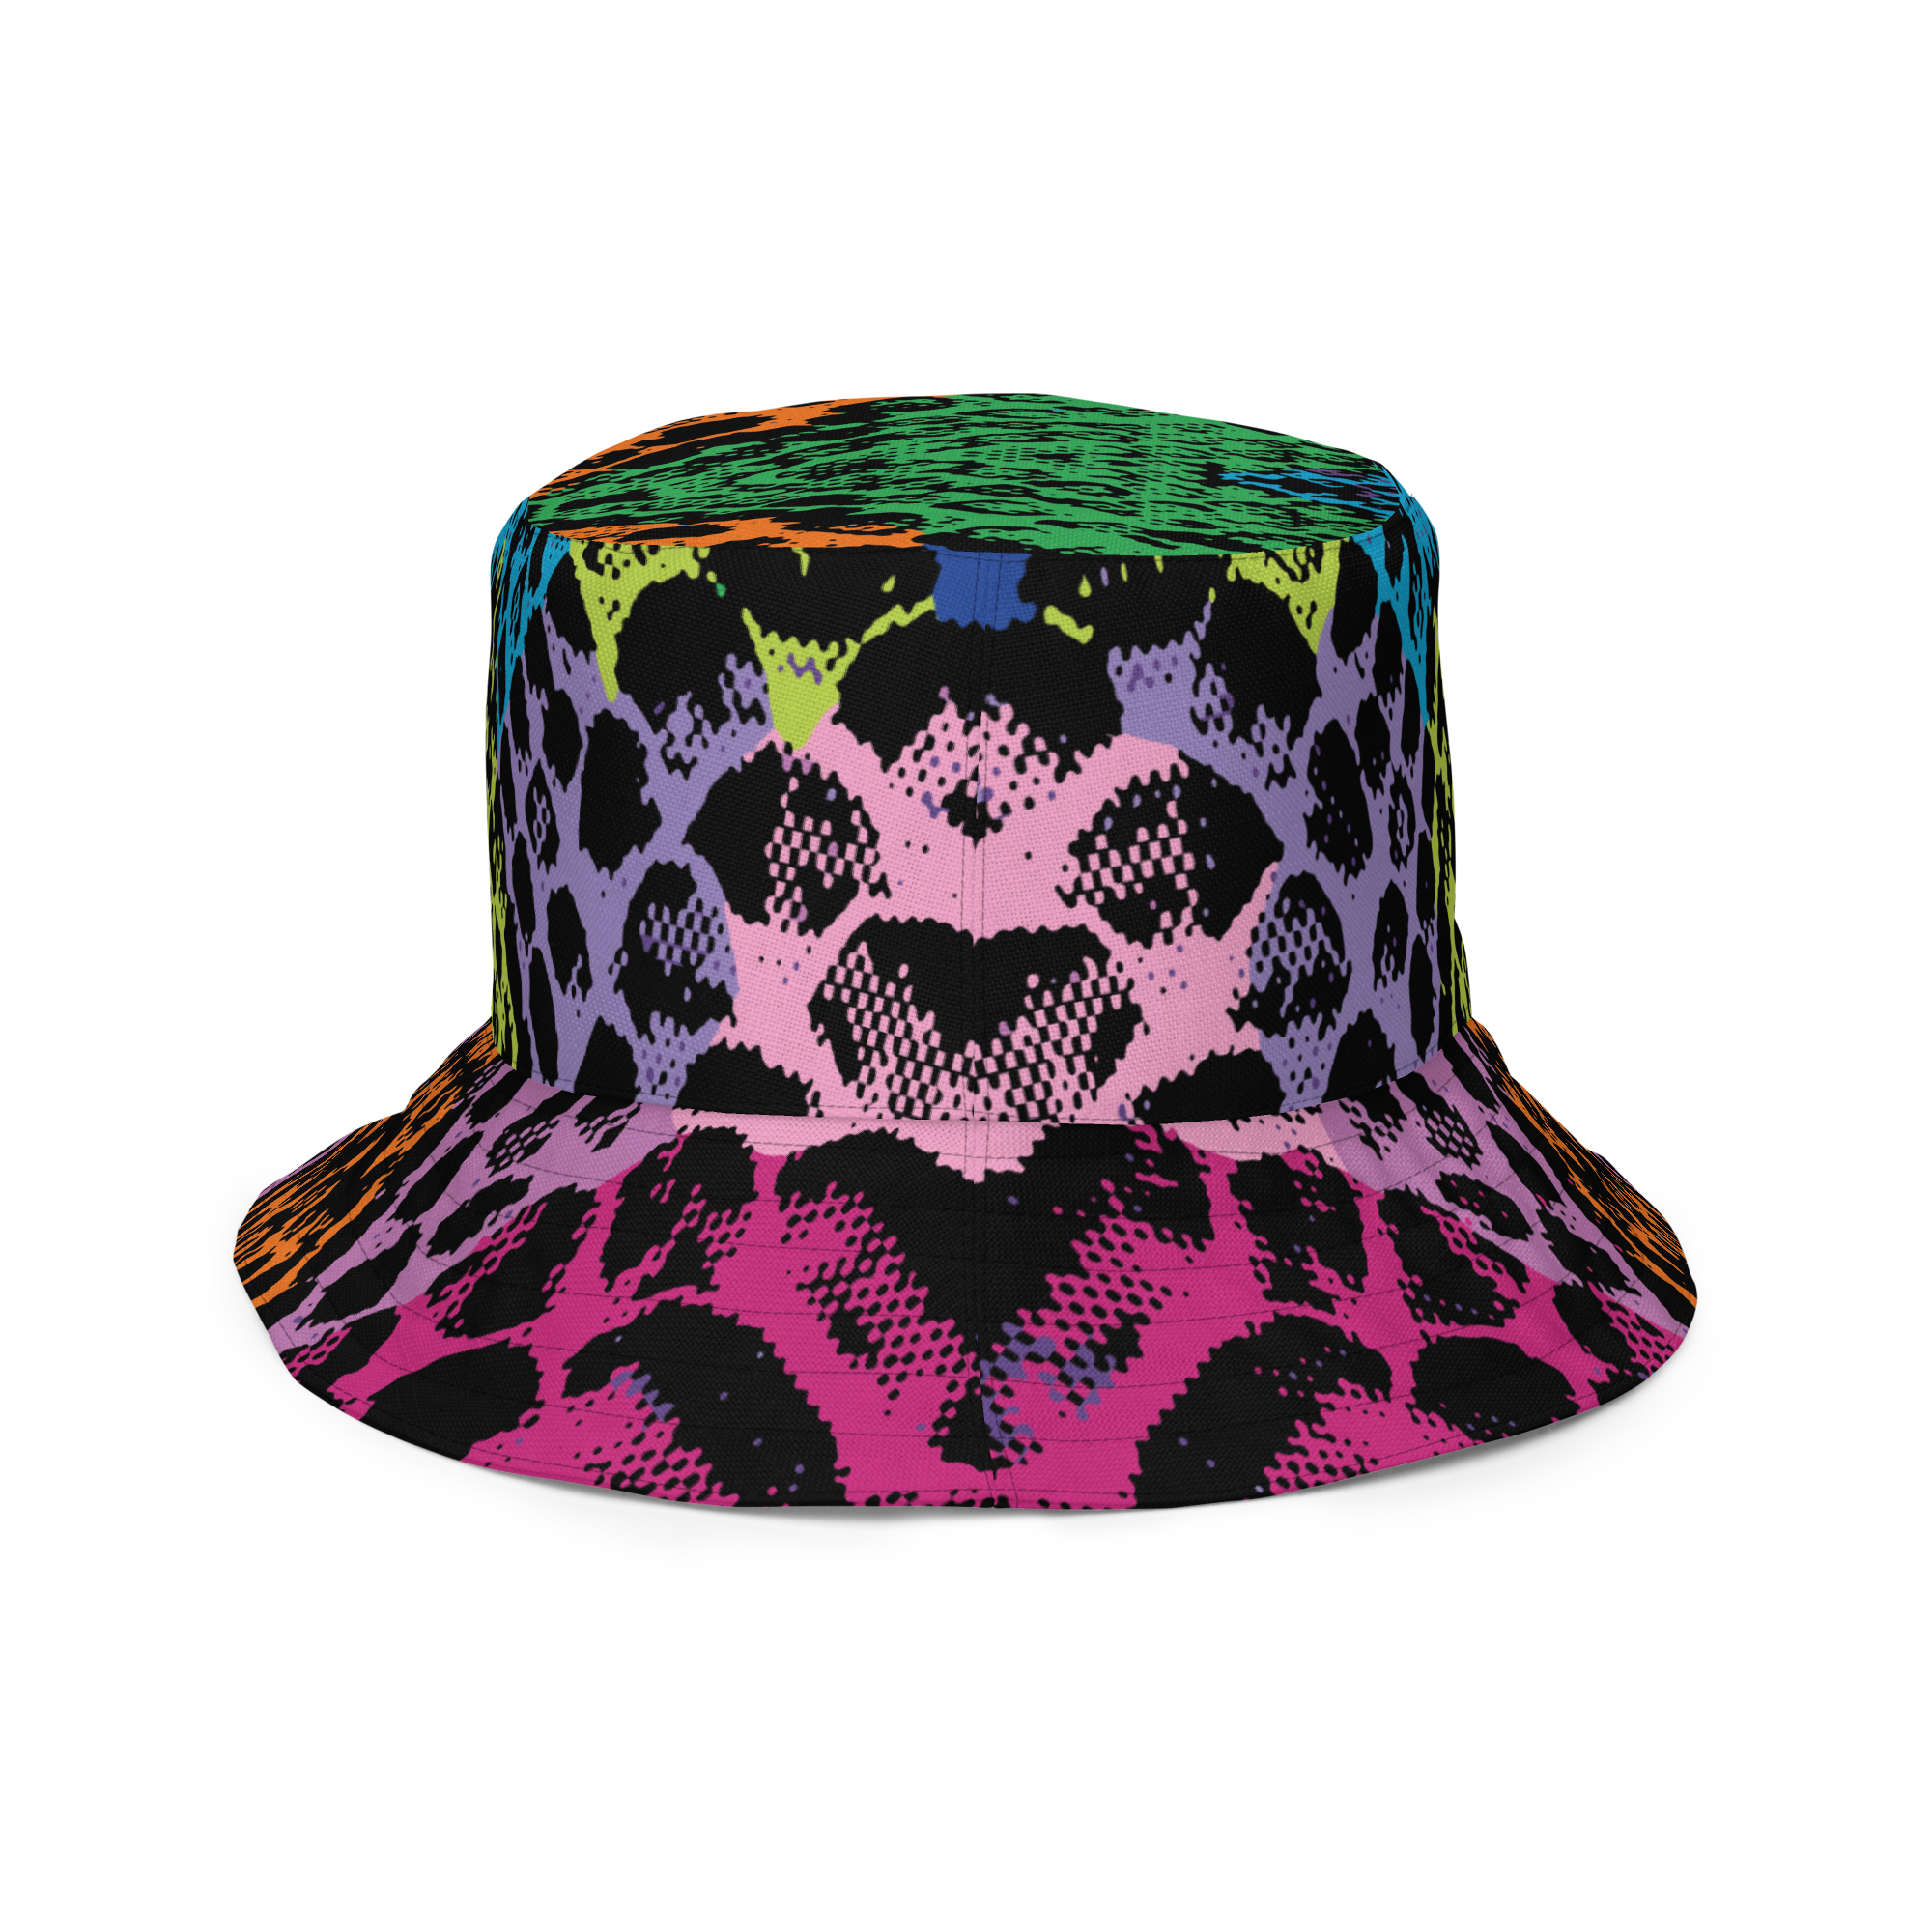 Double-Faced Snakeskin Reversible Bucket Hat